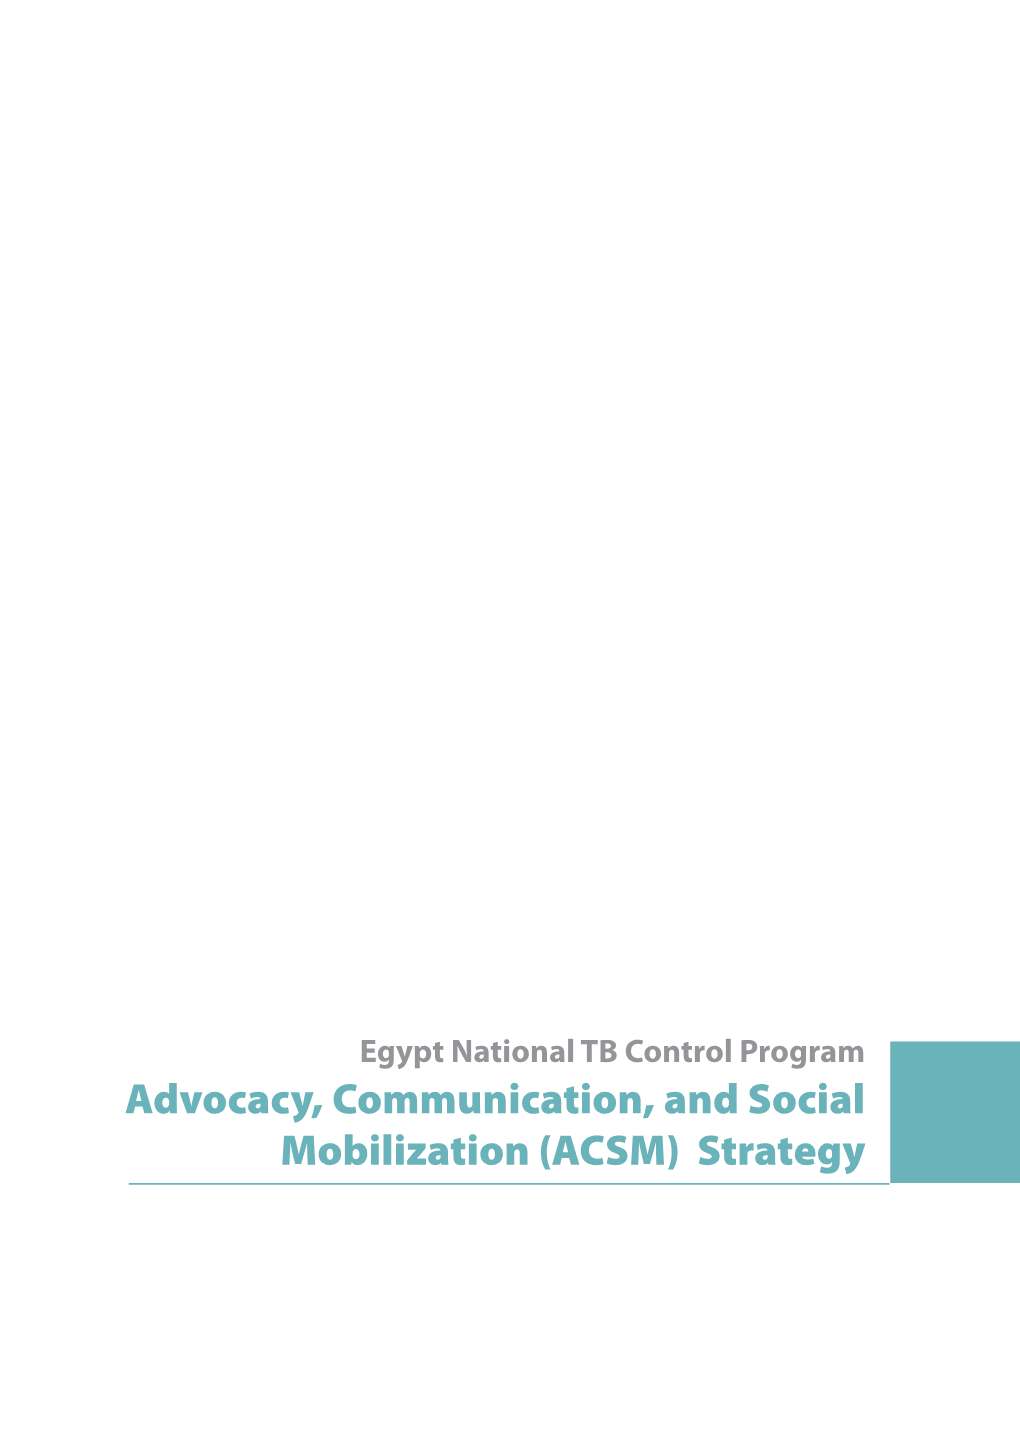 Advocacy, Communication, and Social Mobilization (ACSM) Strategy